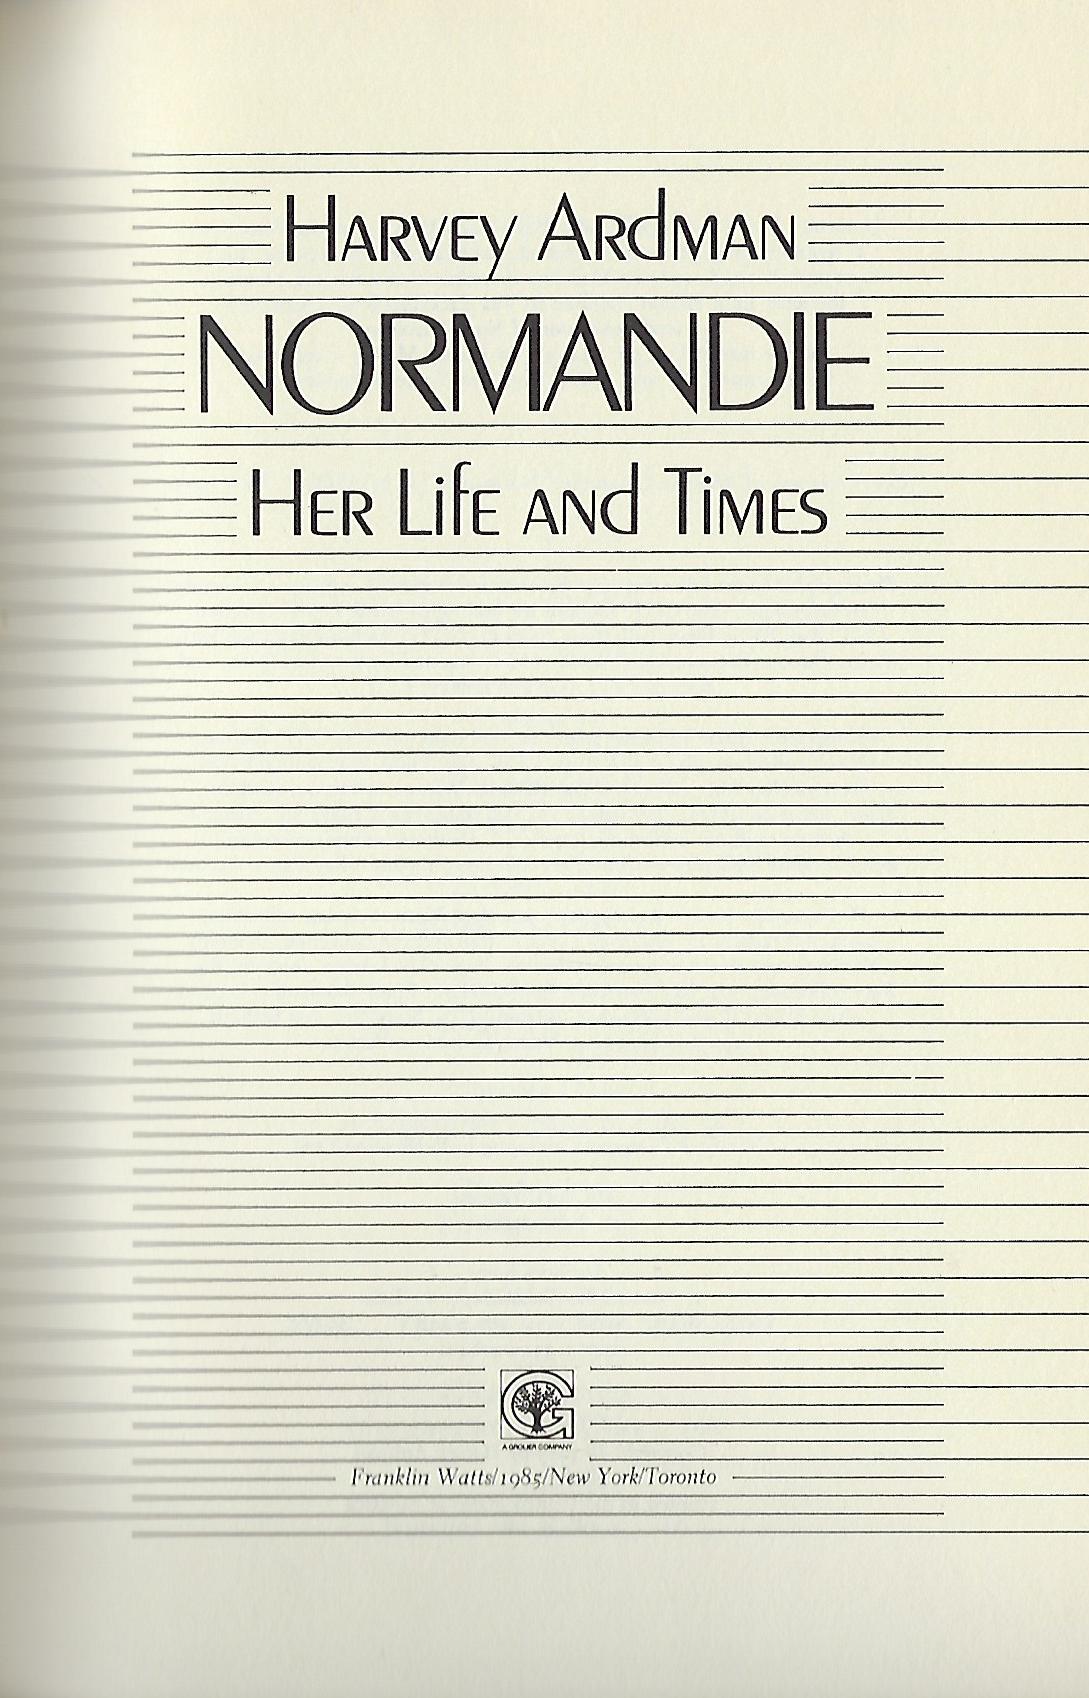 Normandie: Her Life and Times: Ardman, Harvey: 9780531097847